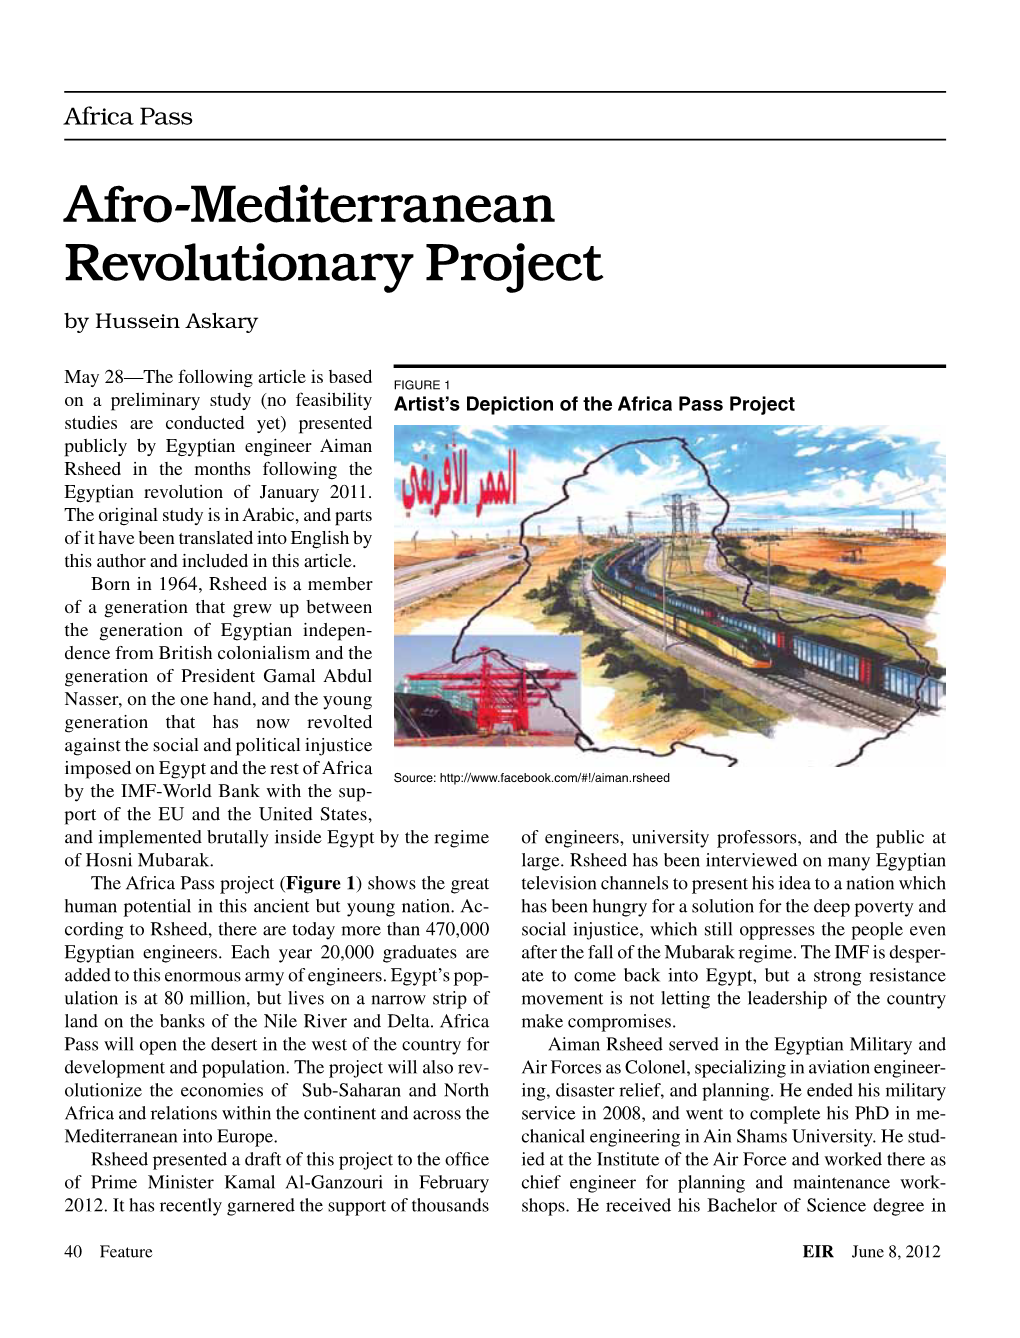 Africa Pass: Afro-Mediterranean Revolutionary Project